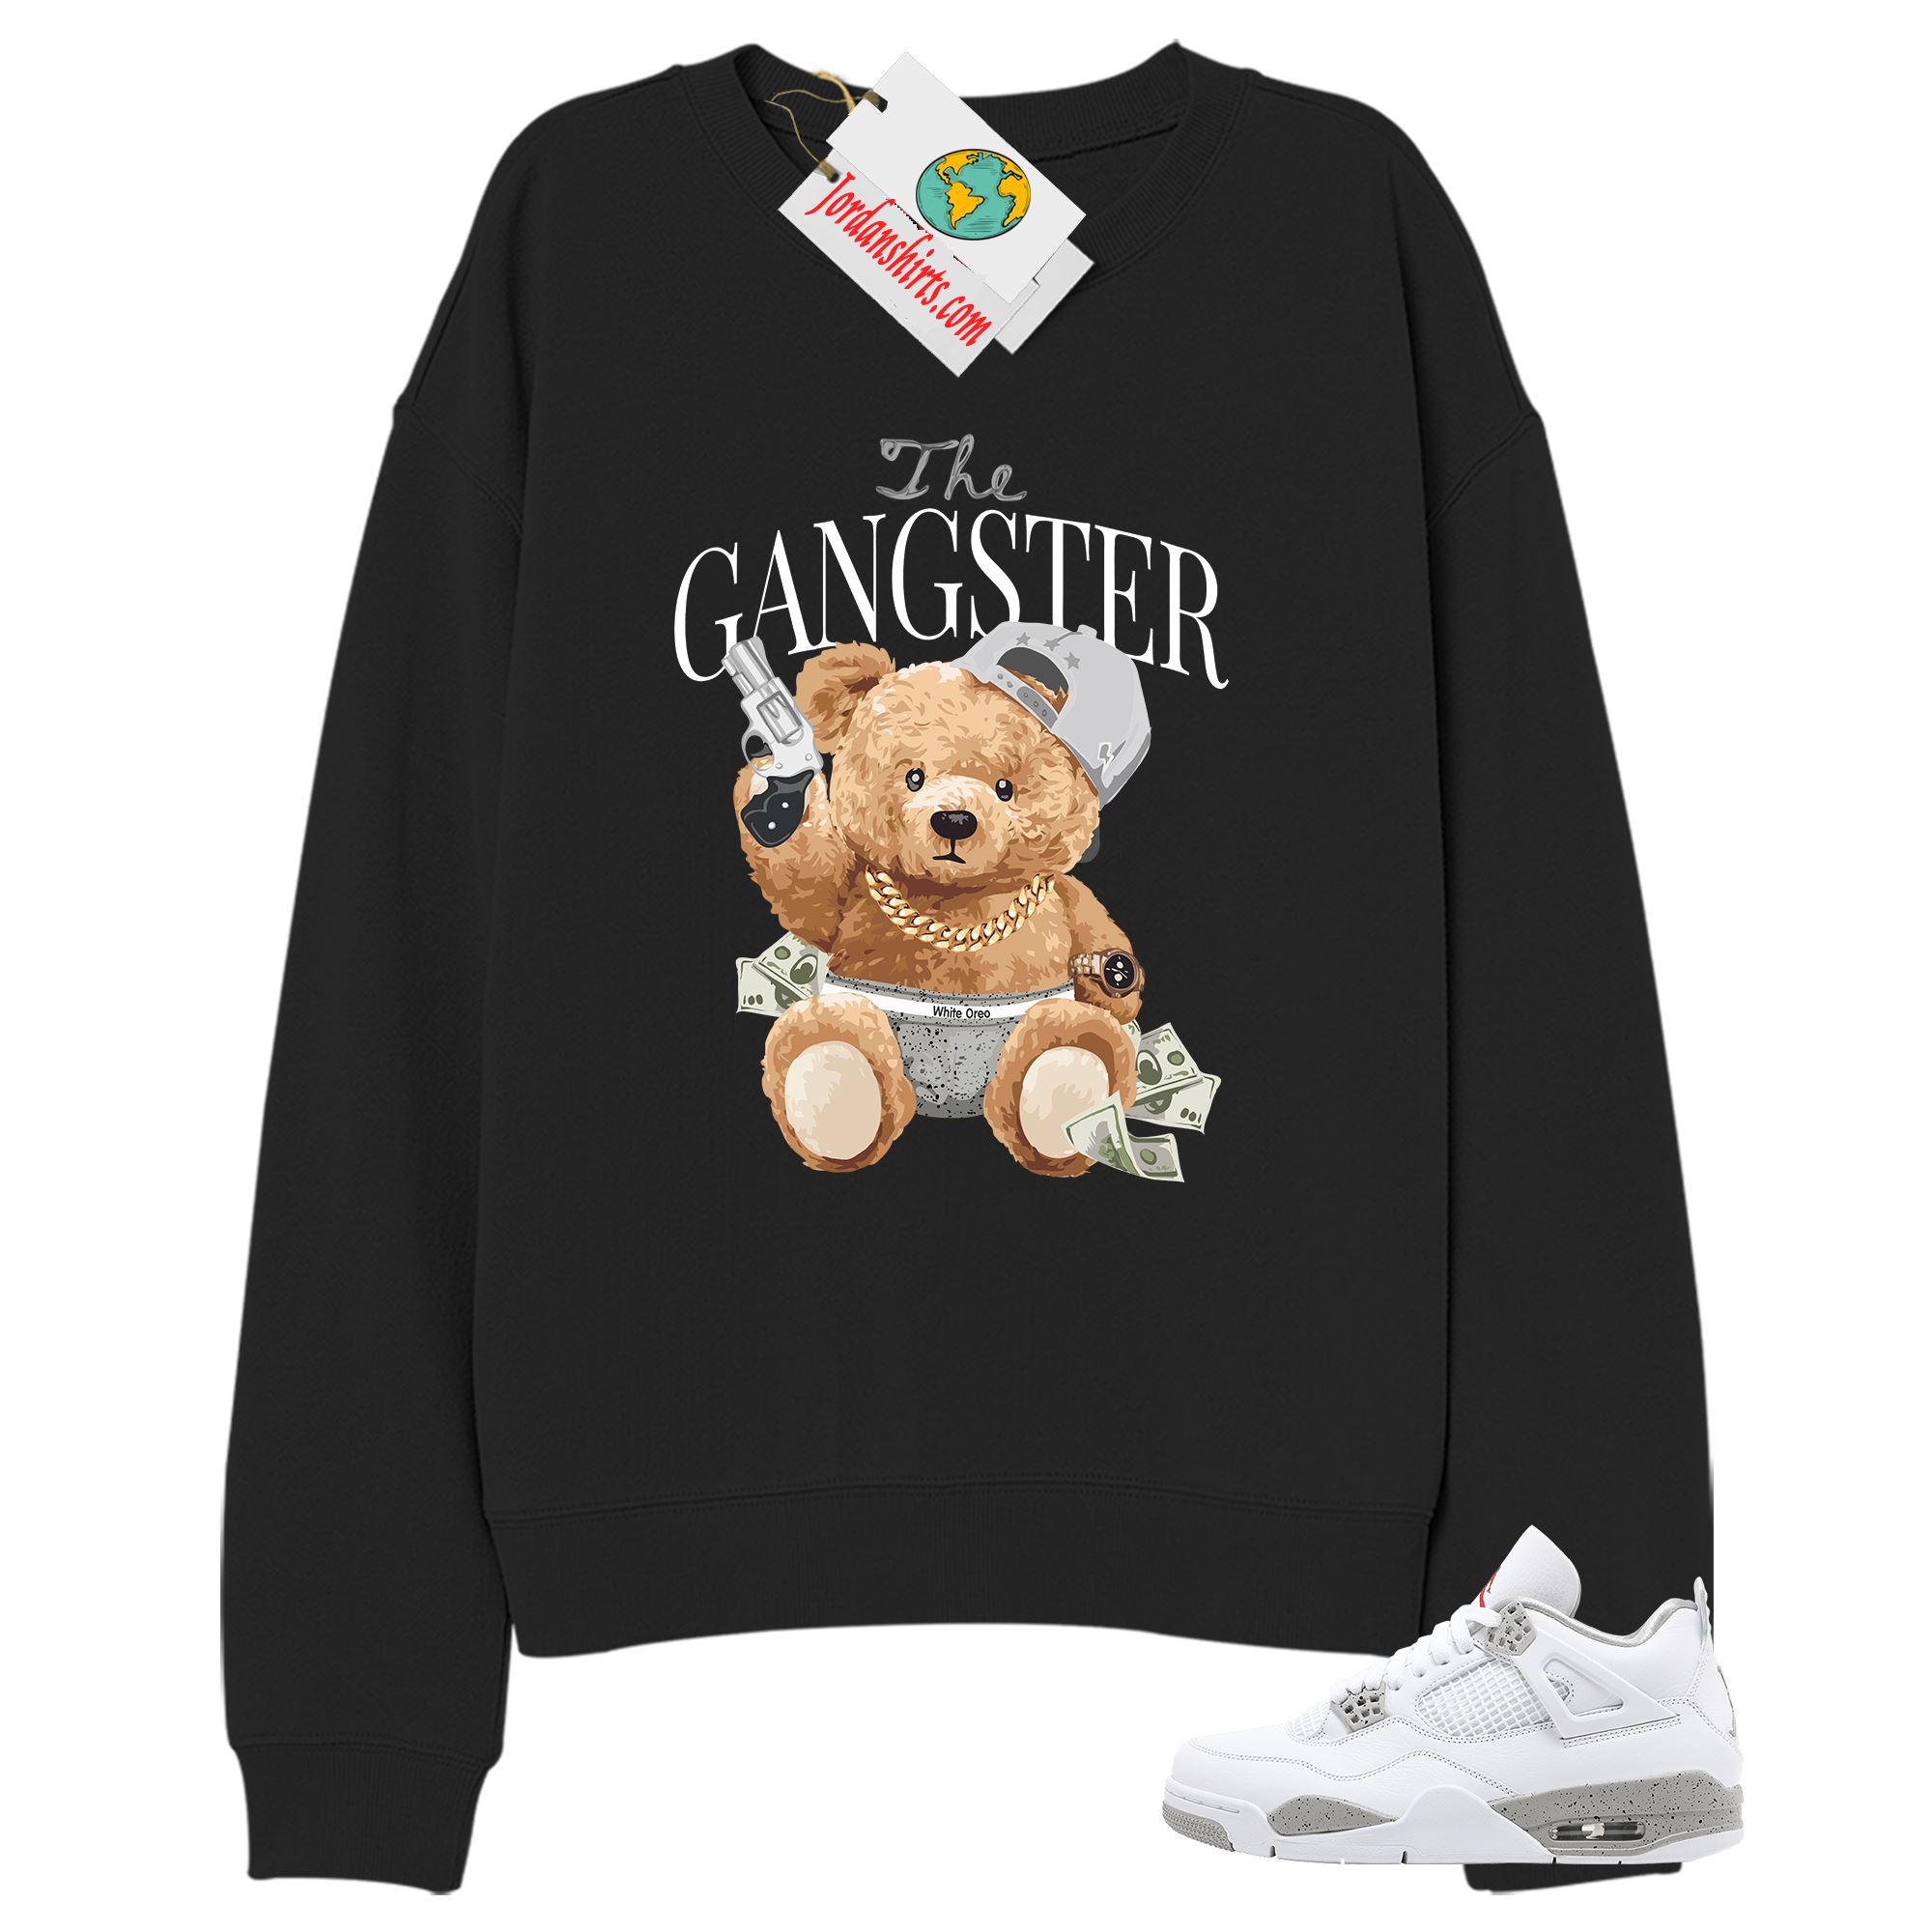 Jordan 4 Sweatshirt, Teddy Bear The Gangster Black Sweatshirt Air Jordan 4 White Oreo 4s Size Up To 5xl